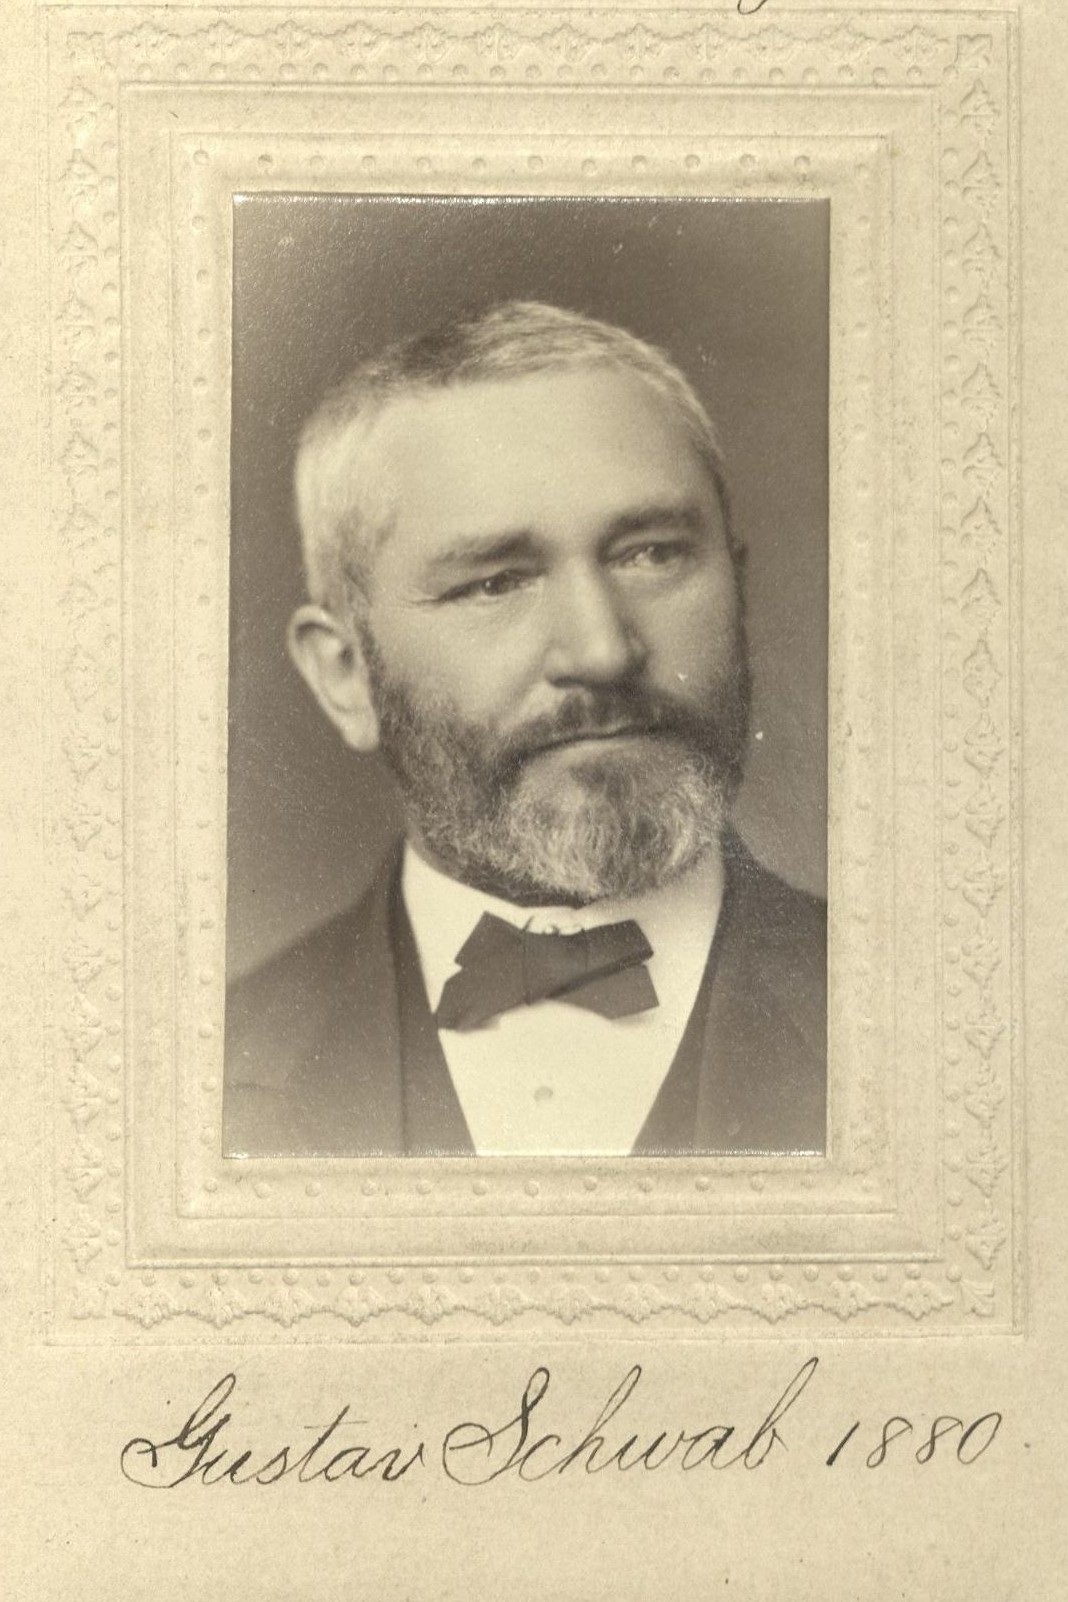 Member portrait of Gustav Schwab